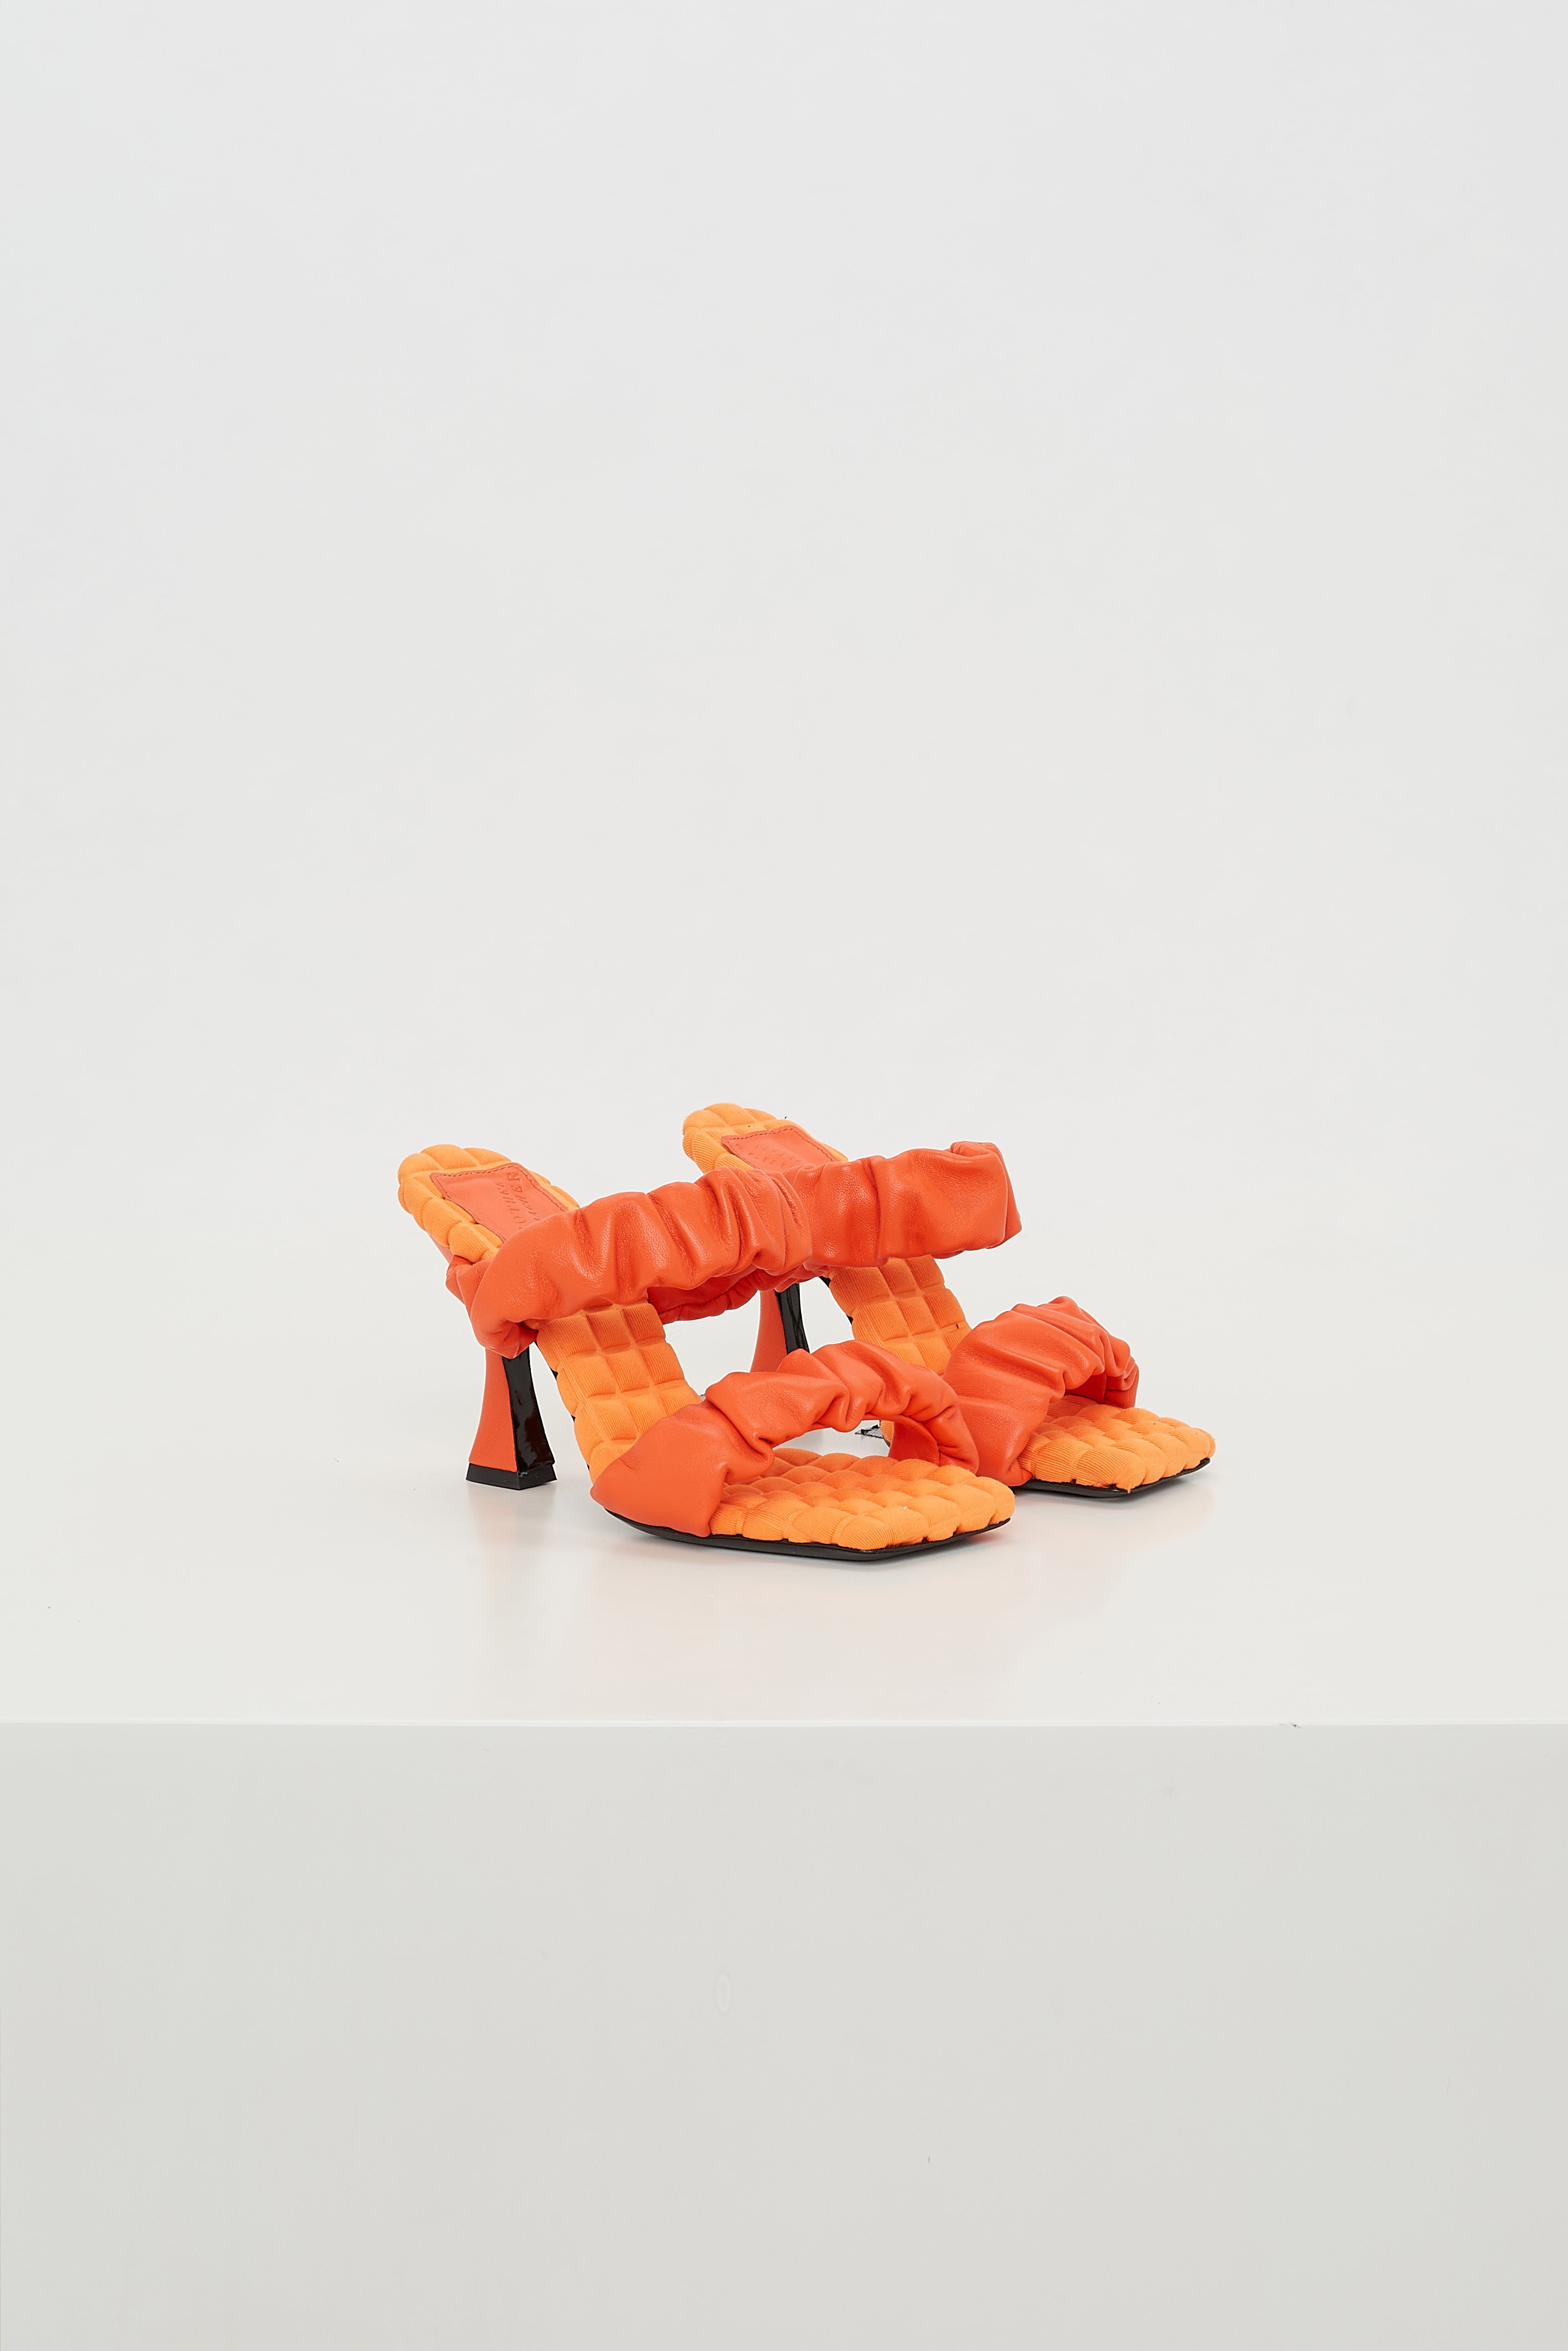 Dorothee-Schumacher-OUTLET-SALE-SPORTY-FEMININITY-sandal-heeled-Sandalen-ARCHIVE-COLLECTION.jpg